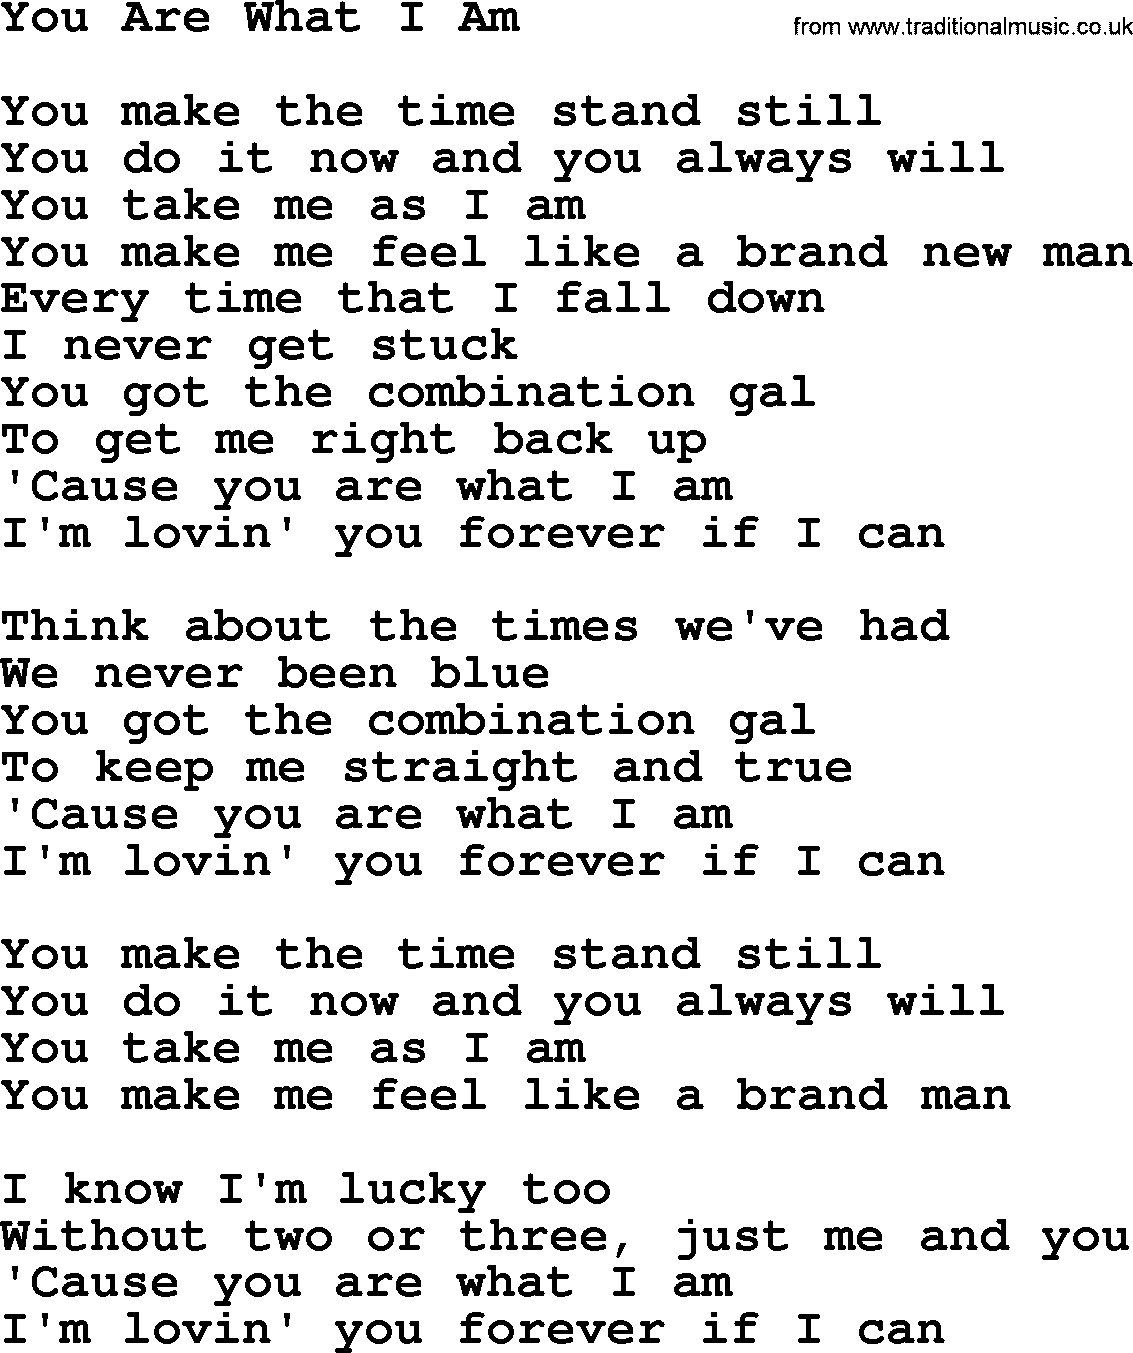 Gordon Lightfoot song You Are What I Am, lyrics